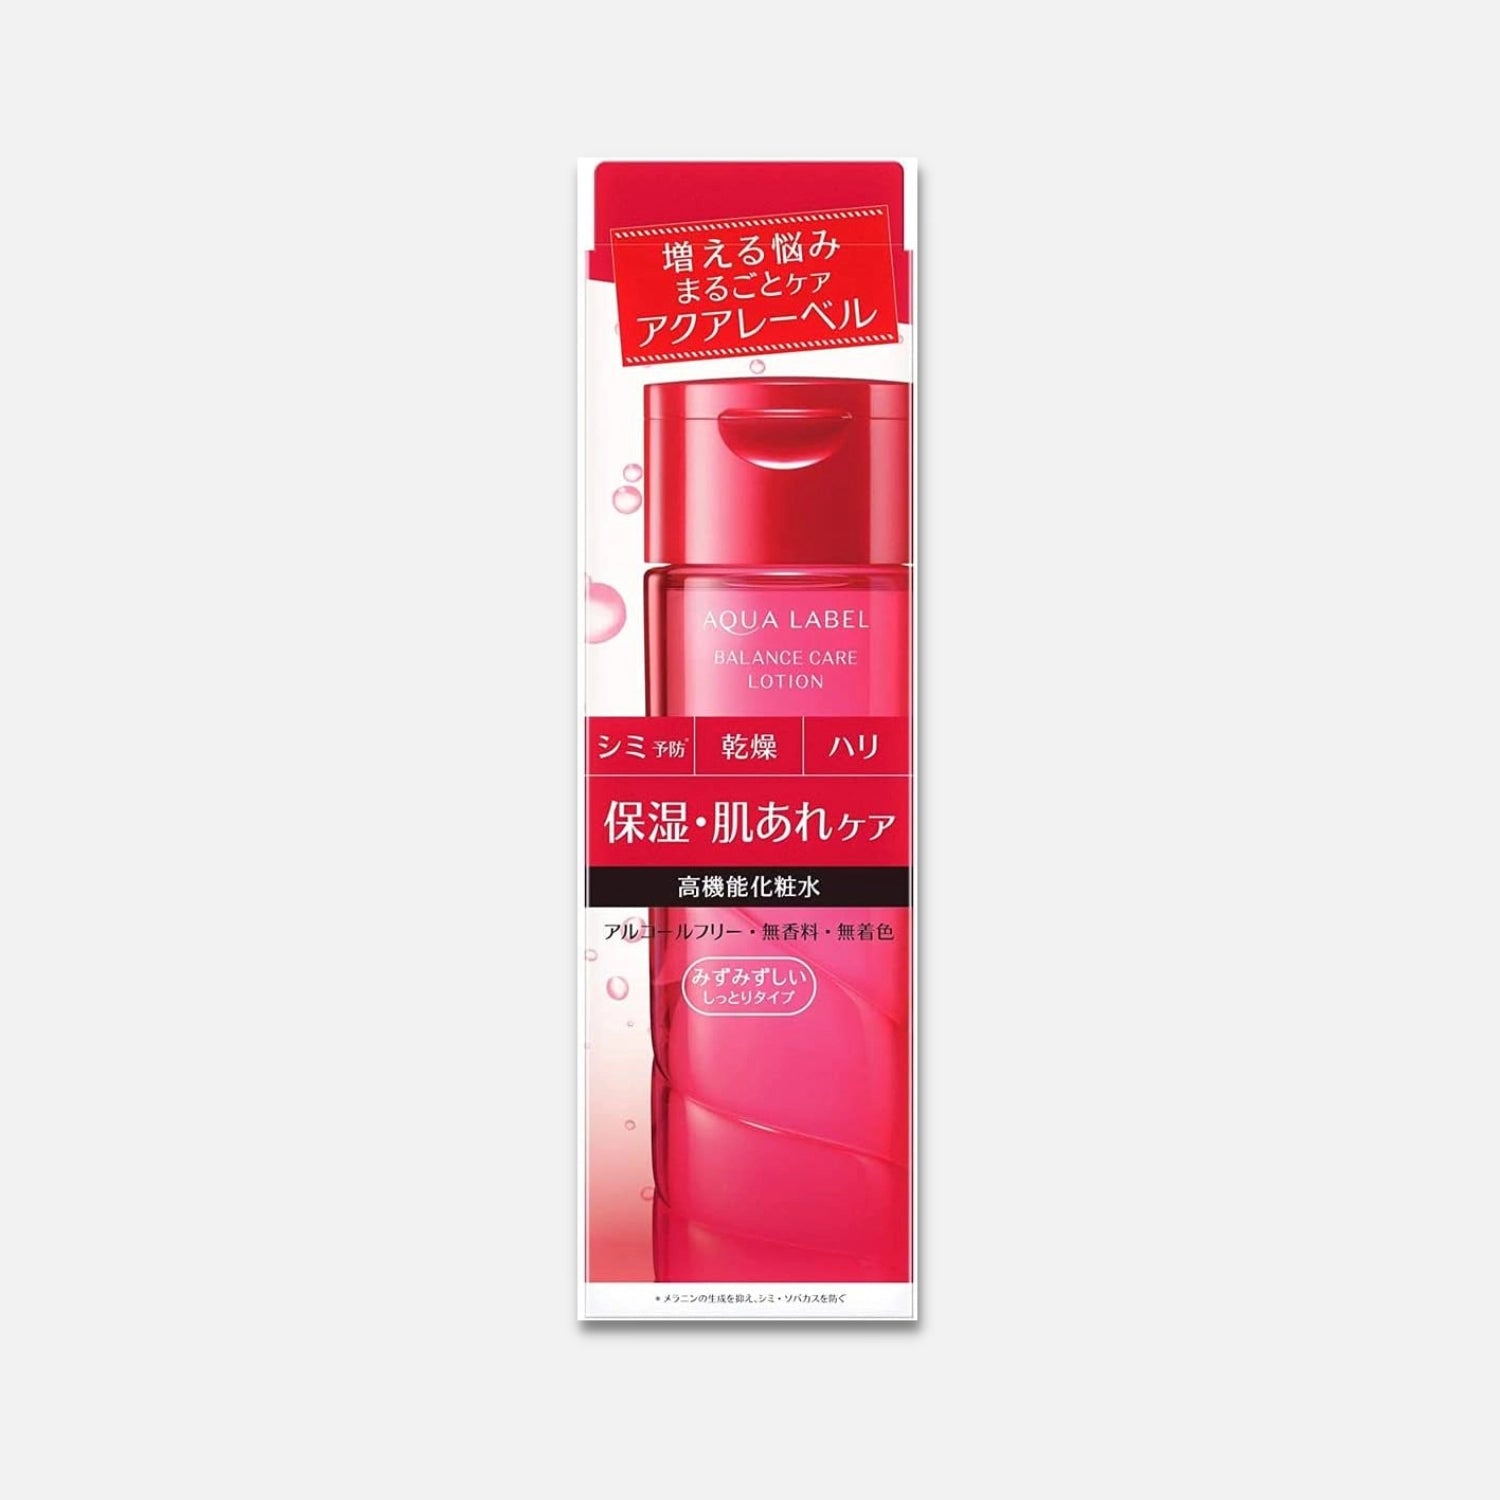 Shiseido AQUALABEL Balance Care Lotion 200ml - Buy Me Japan